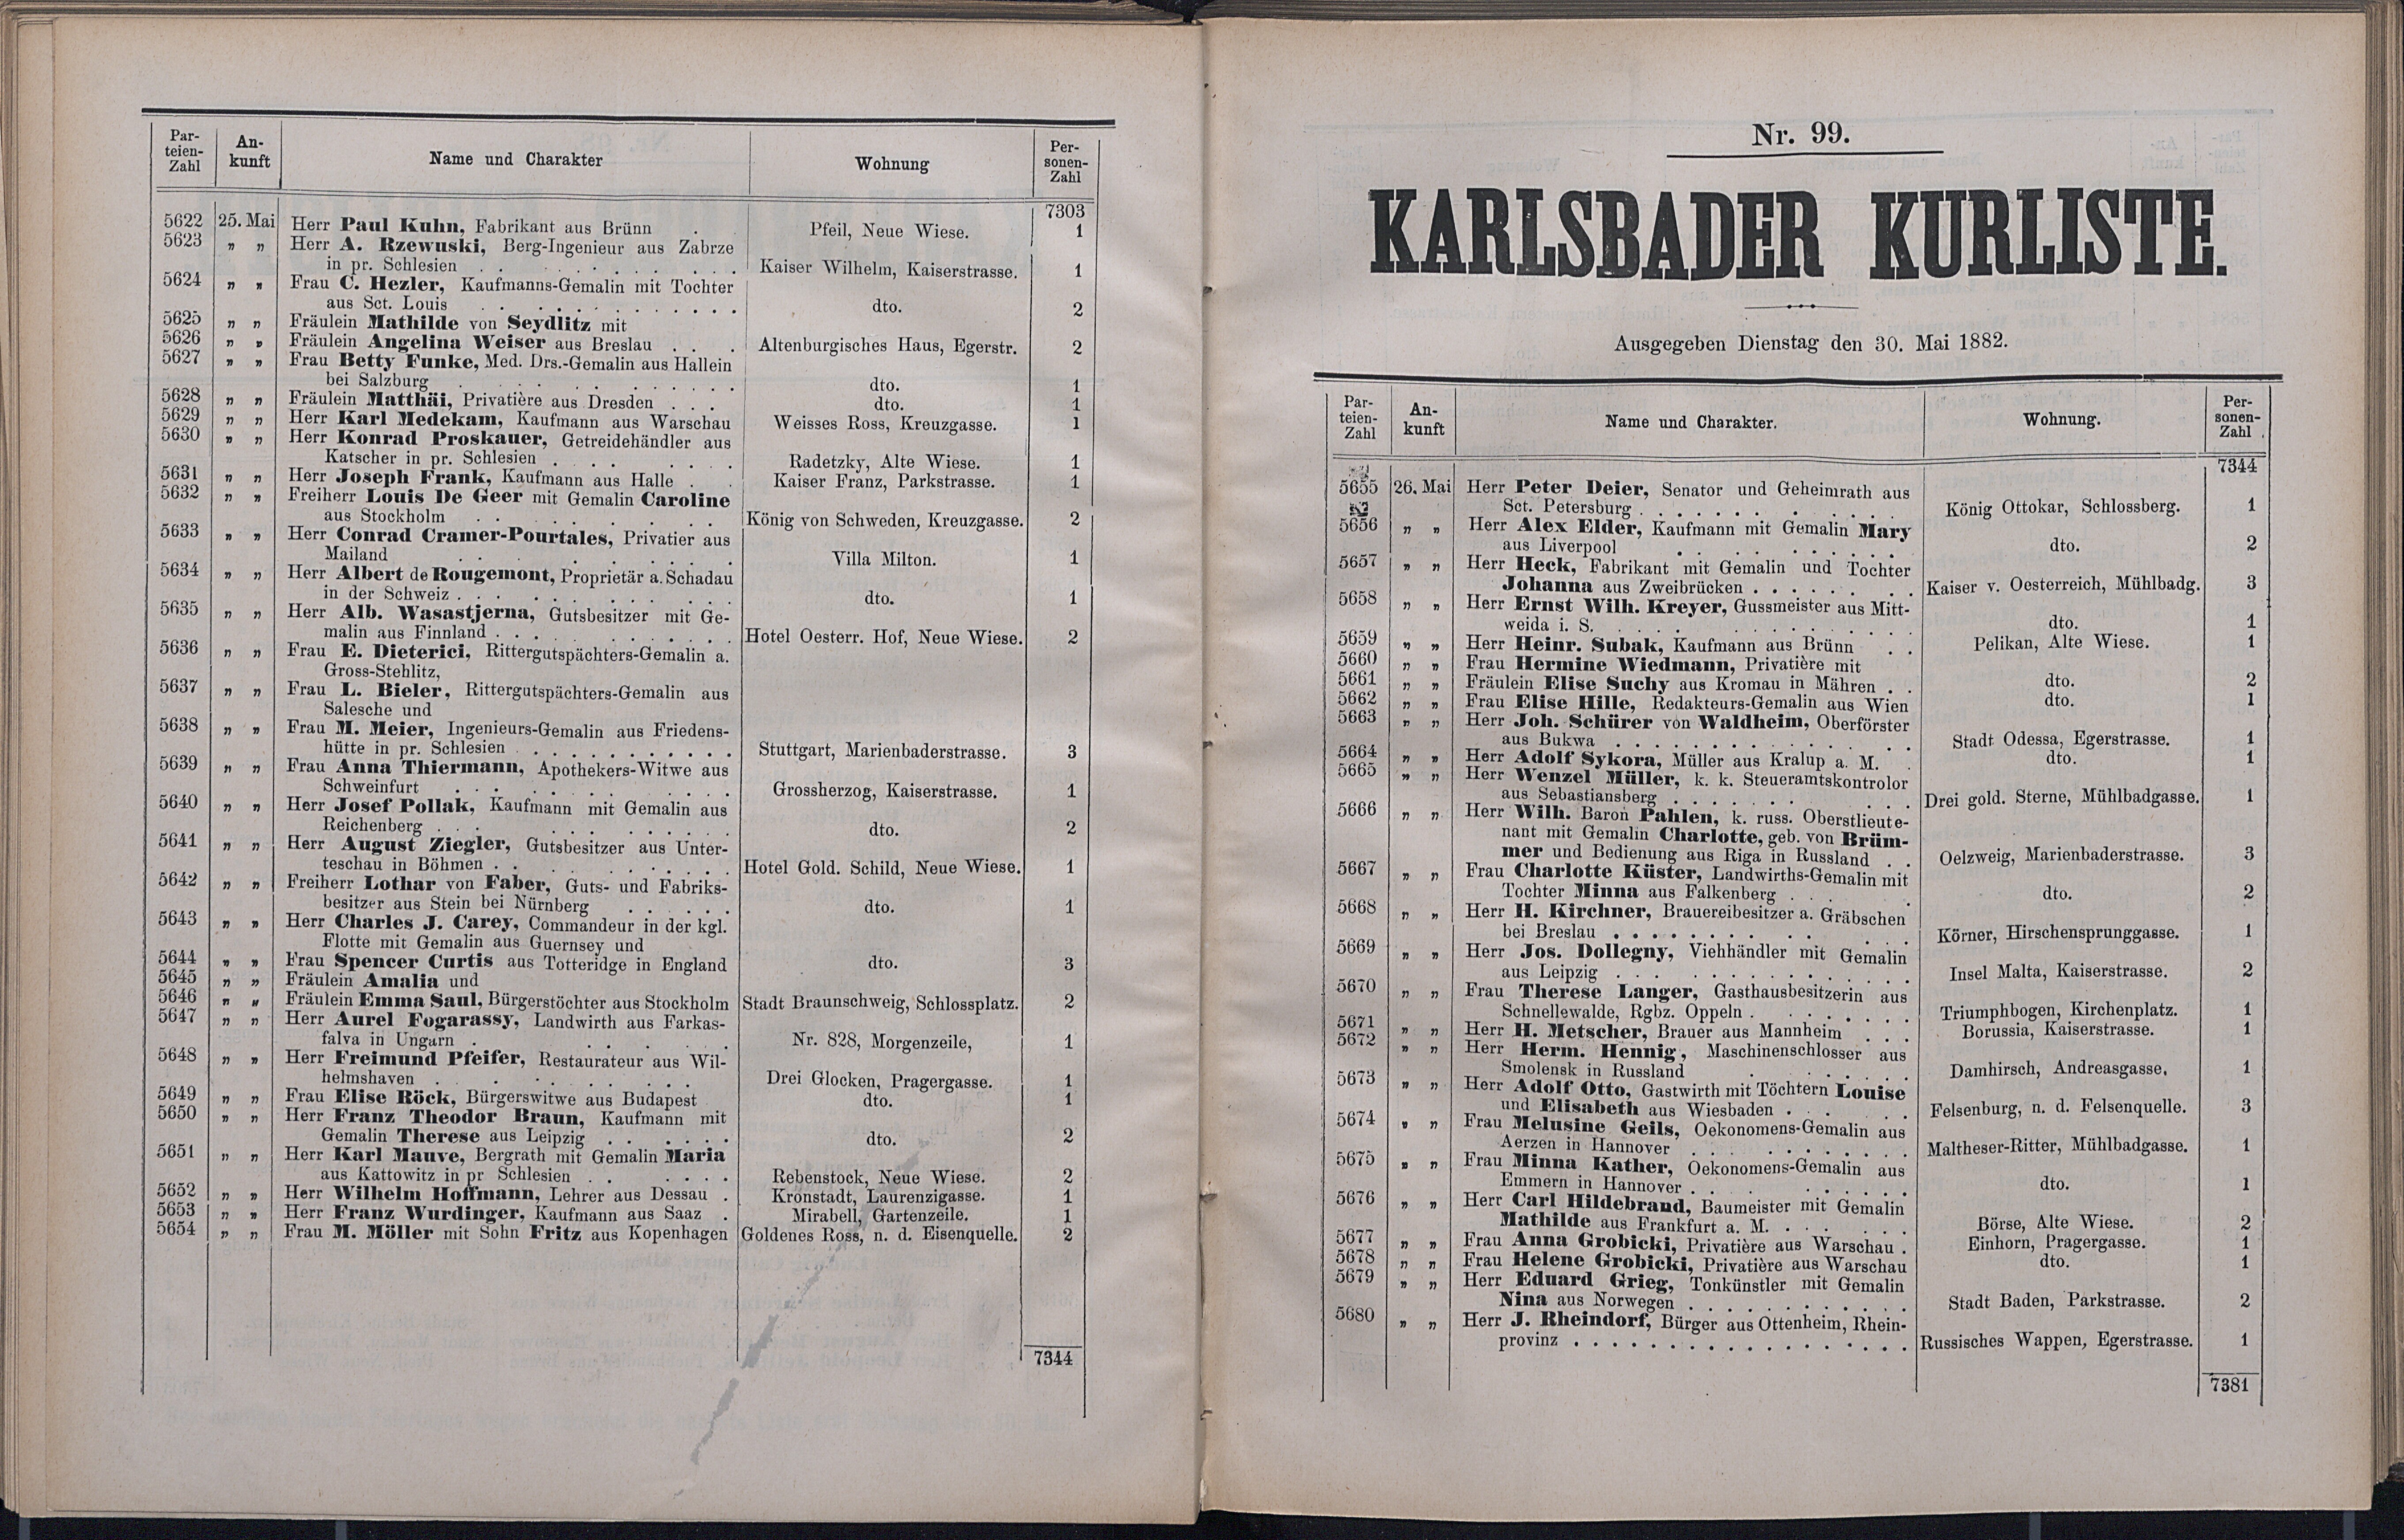 149. soap-kv_knihovna_karlsbader-kurliste-1882_1500